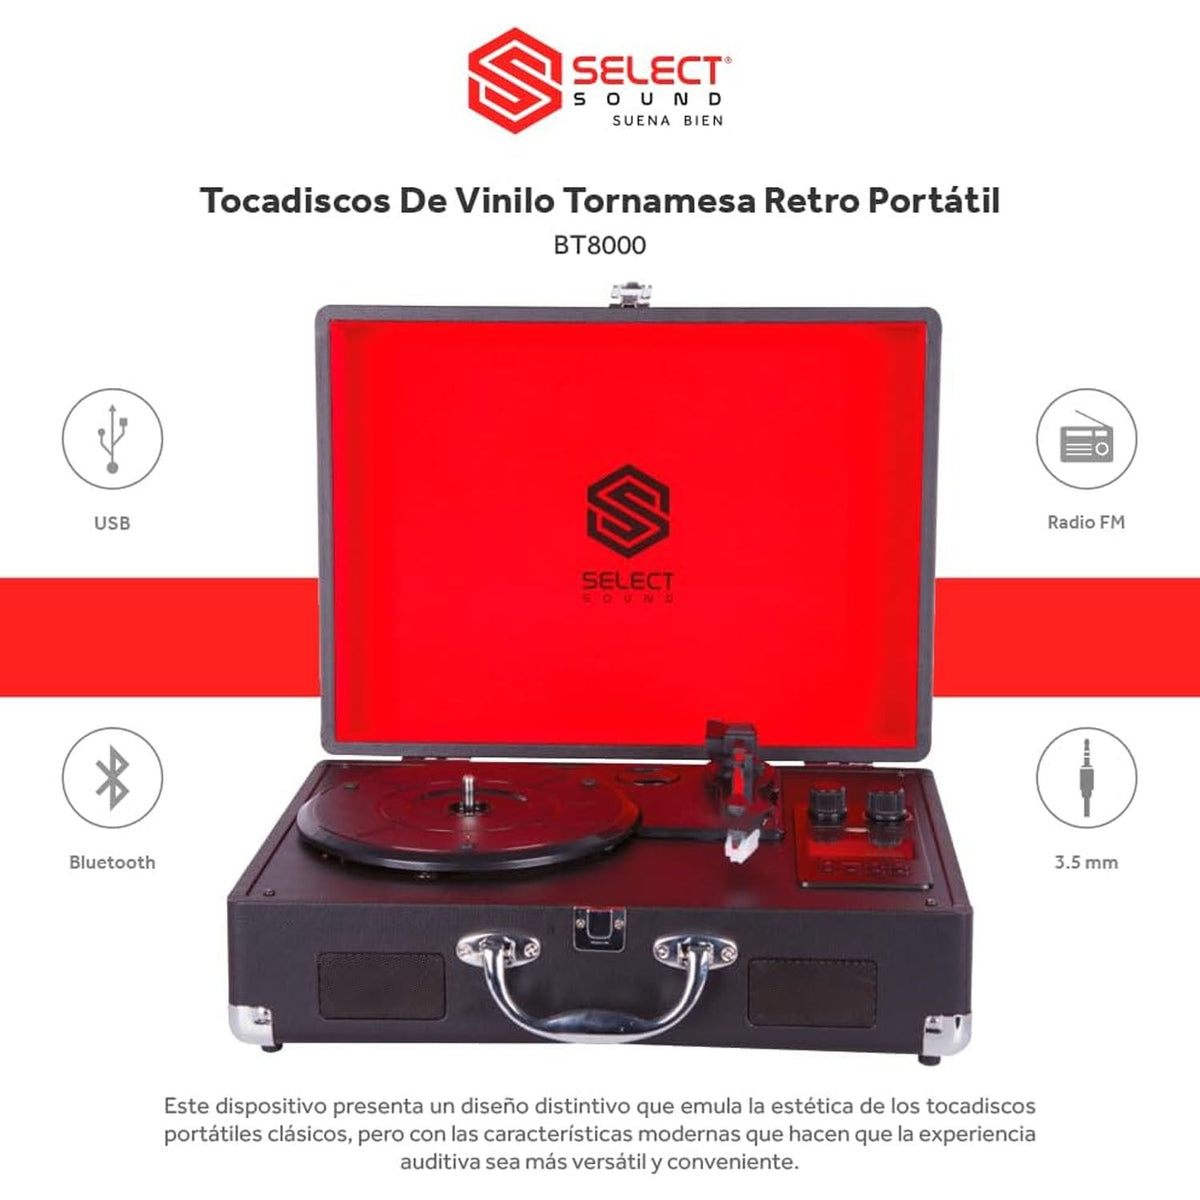 Tocadiscos De Vinilo Tornamesa Retro Portátil Bluetooth Recargable Radio Fm  Select Sound BT8000 